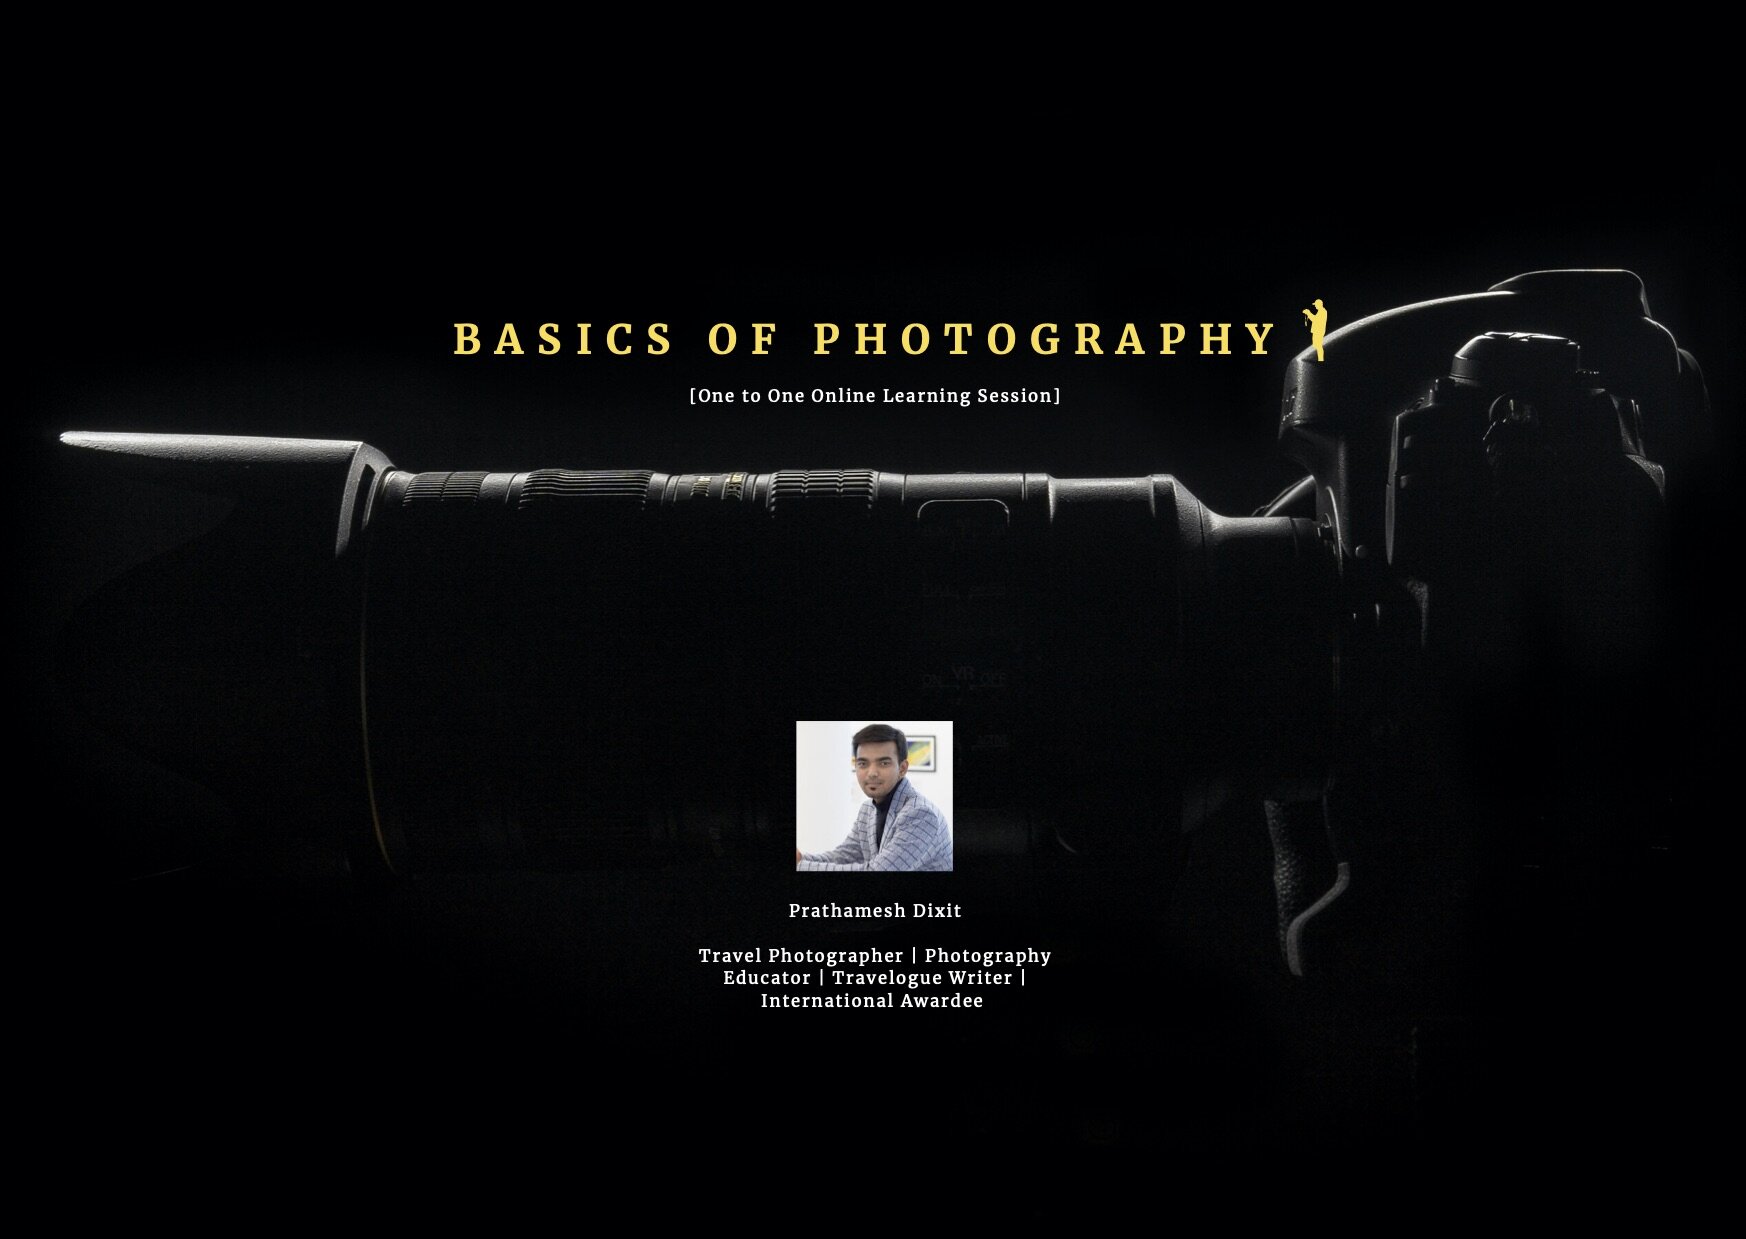 Basics of Photography workshop by Prathamesh Dixit Travel Photographer